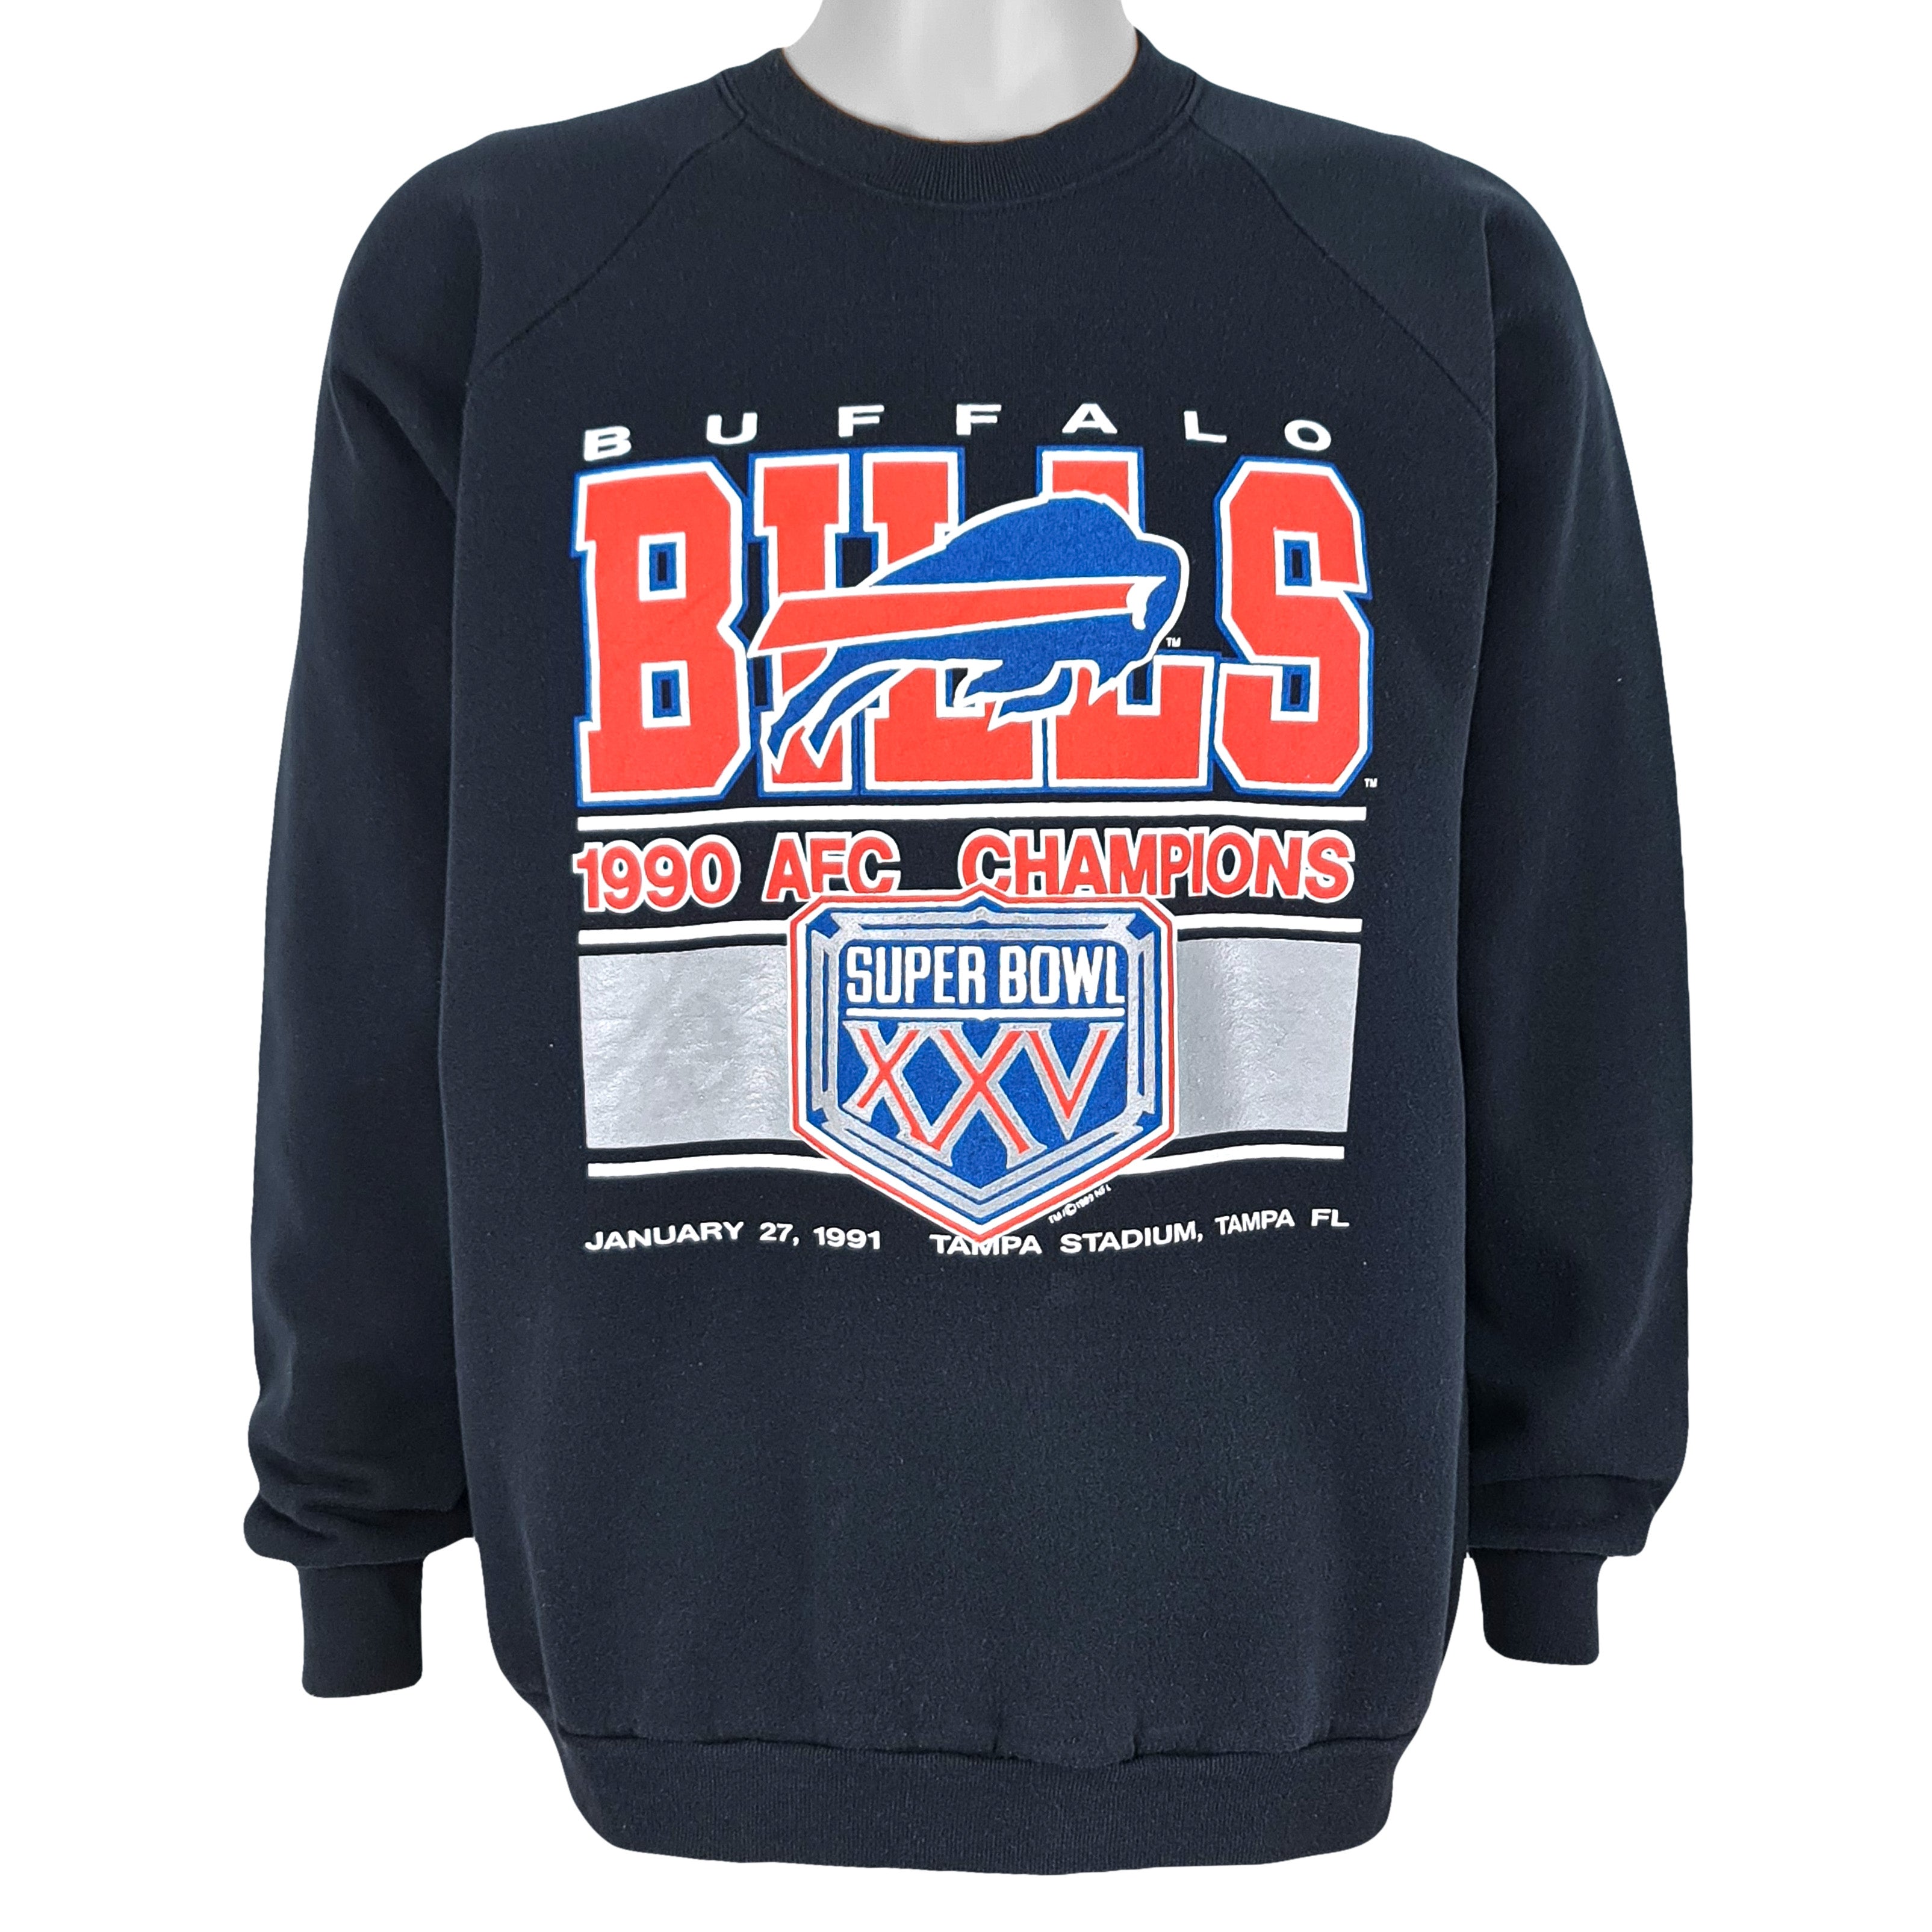 Sweater Buffalo Bills Super Bowl Xxv 1990 Afc Champions